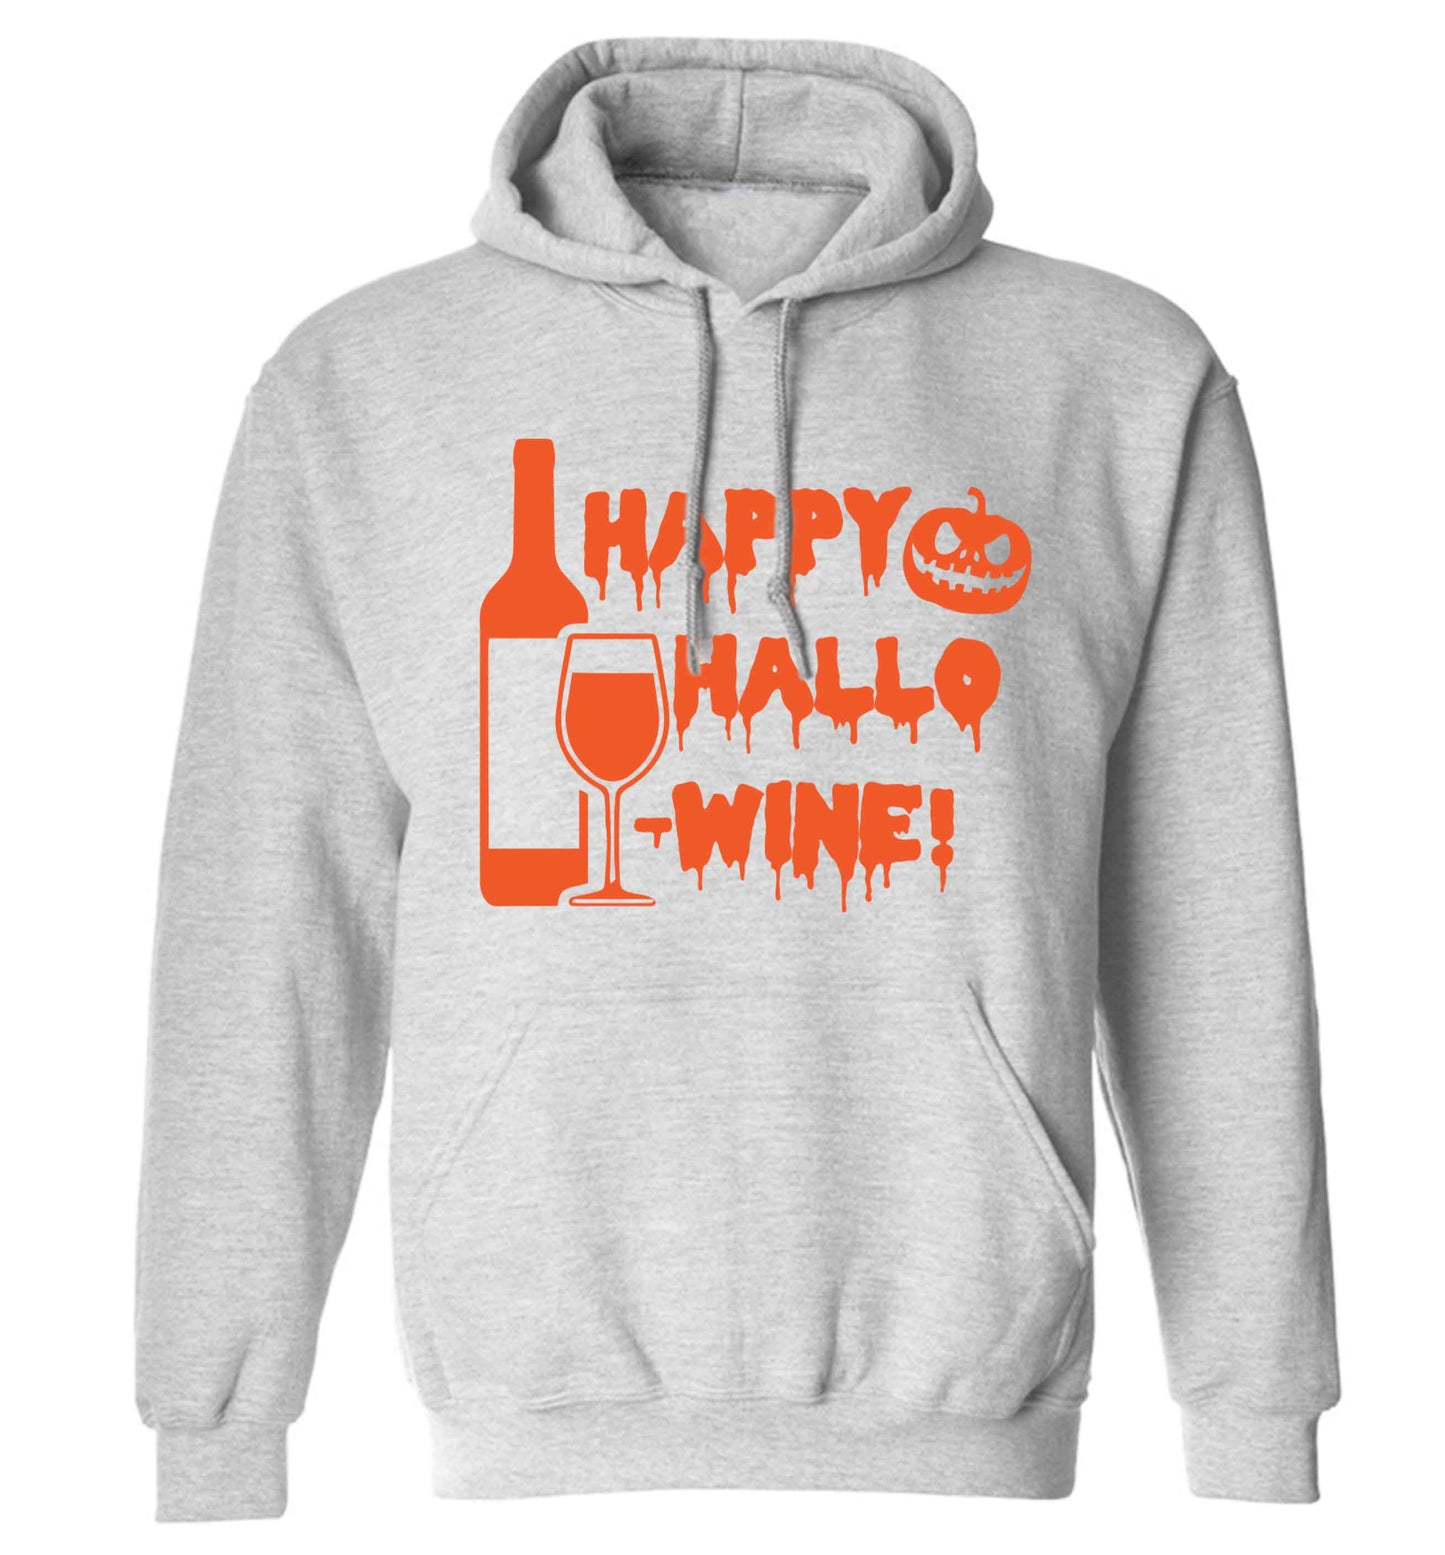 Happy hallow-wine adults unisex grey hoodie 2XL